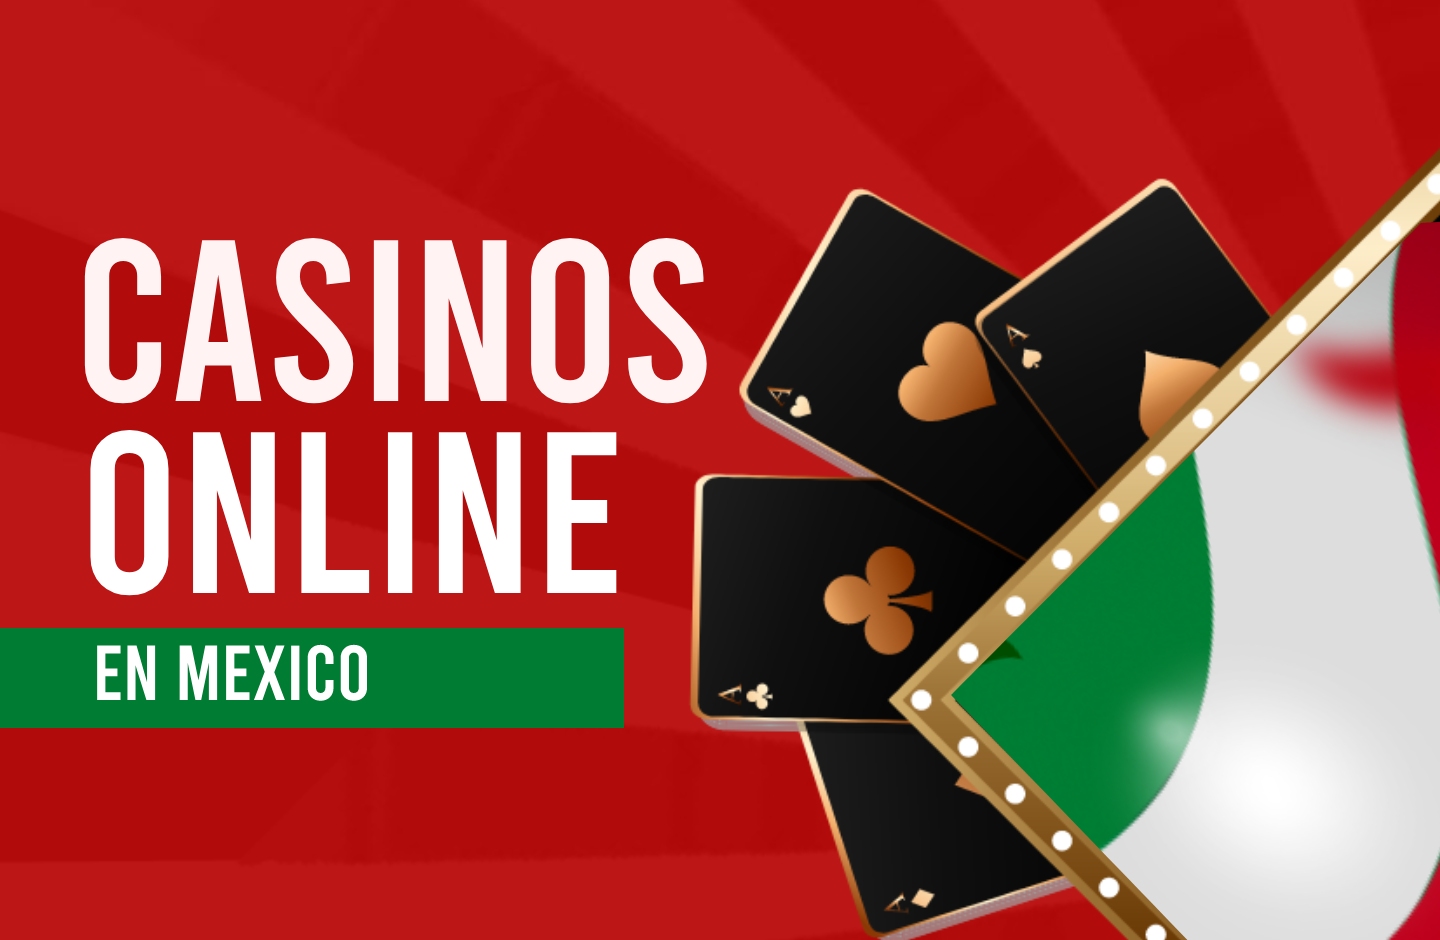 the online casino Mexico